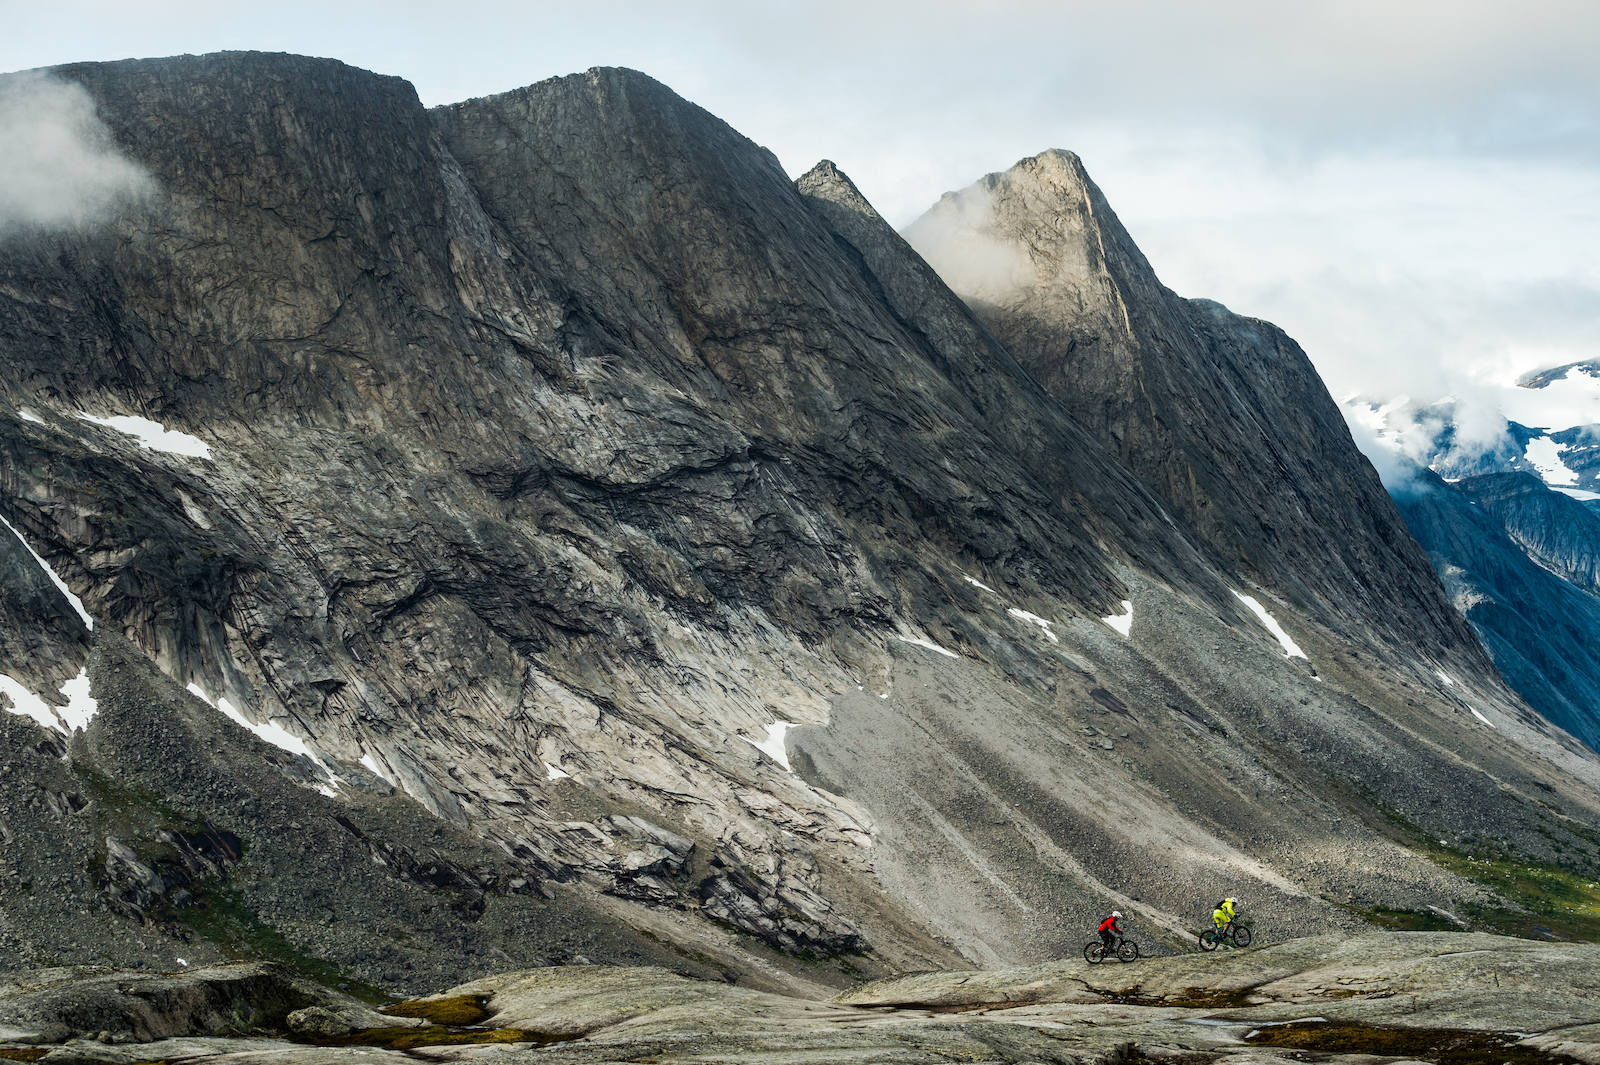 Mikael af Ekenstam and Joey Schulser riding at Reinnesfjellet Norway.